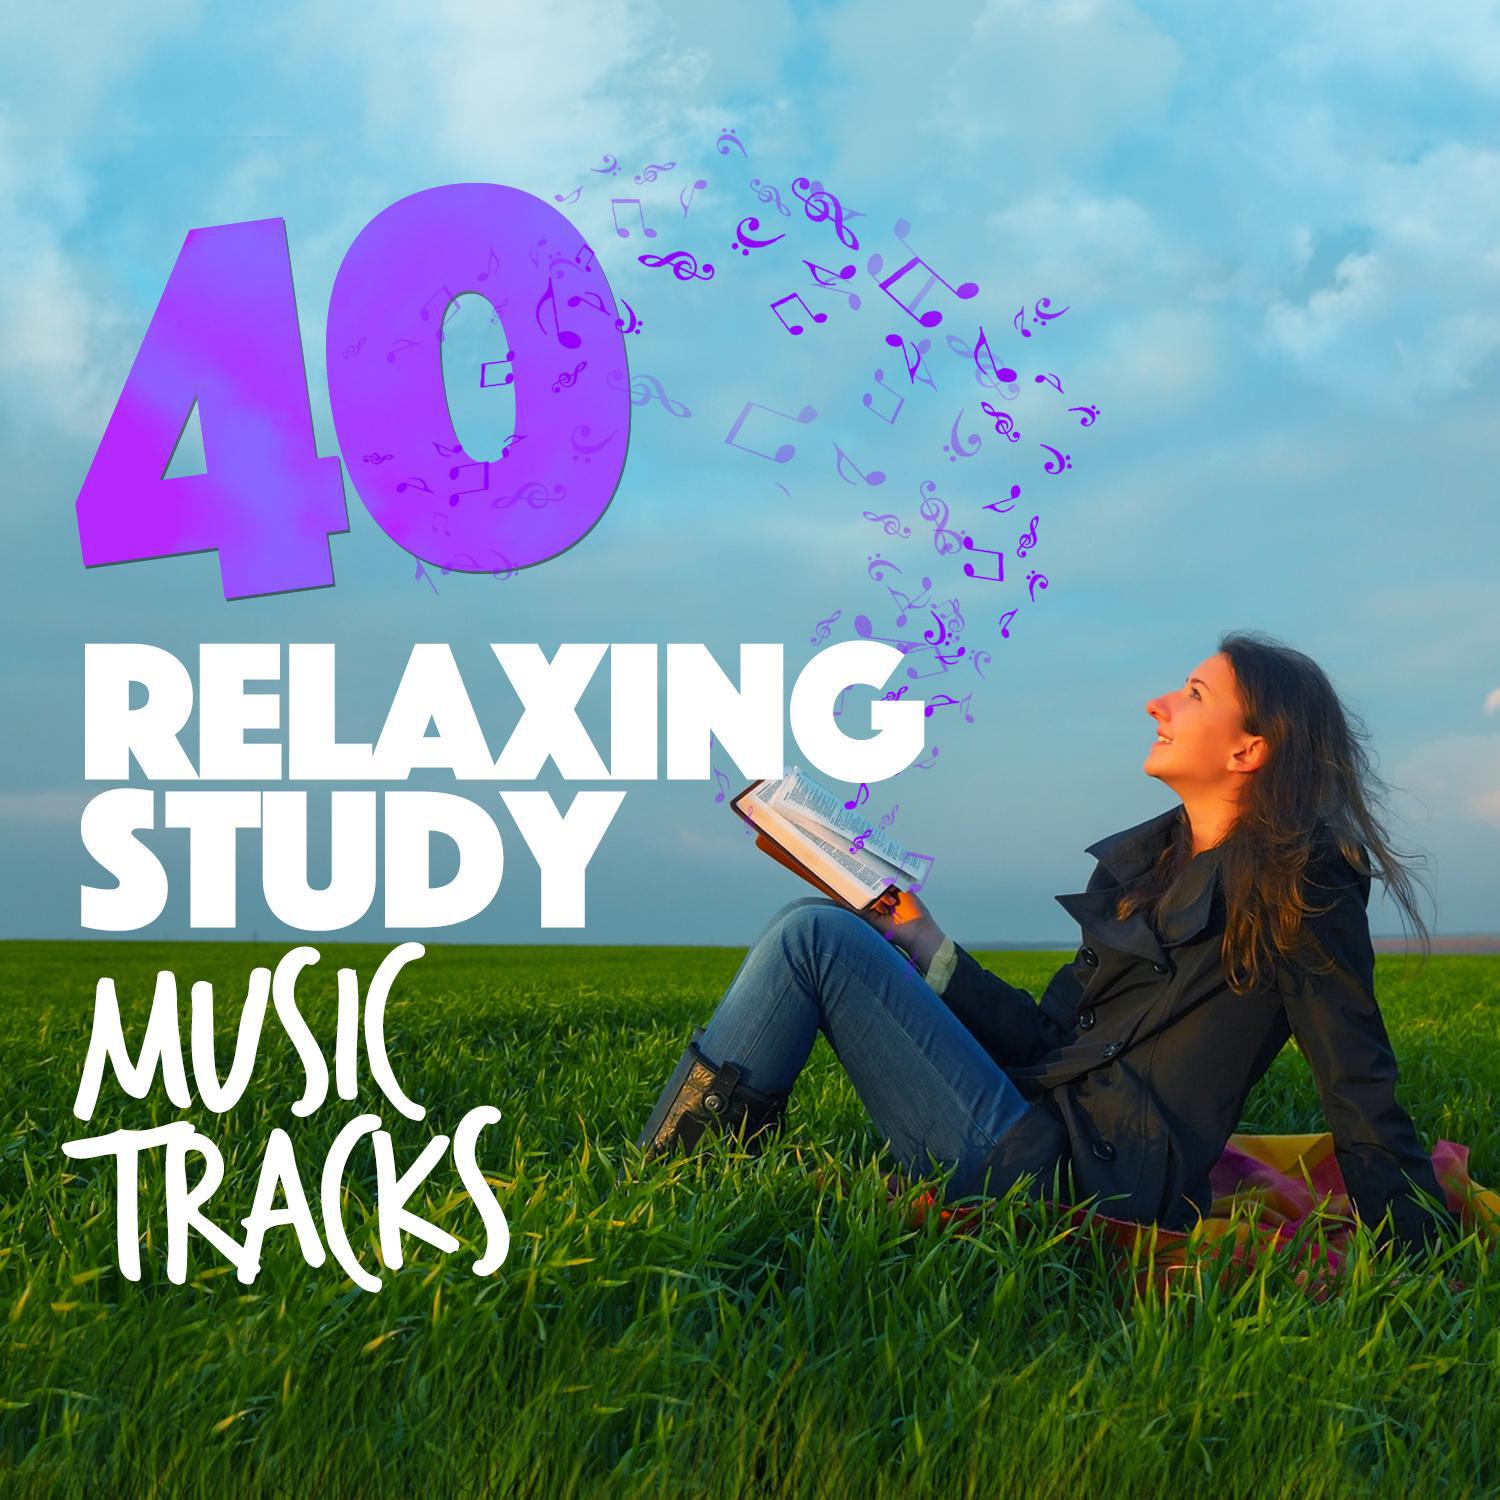 40 Relaxing Study Music Tracks